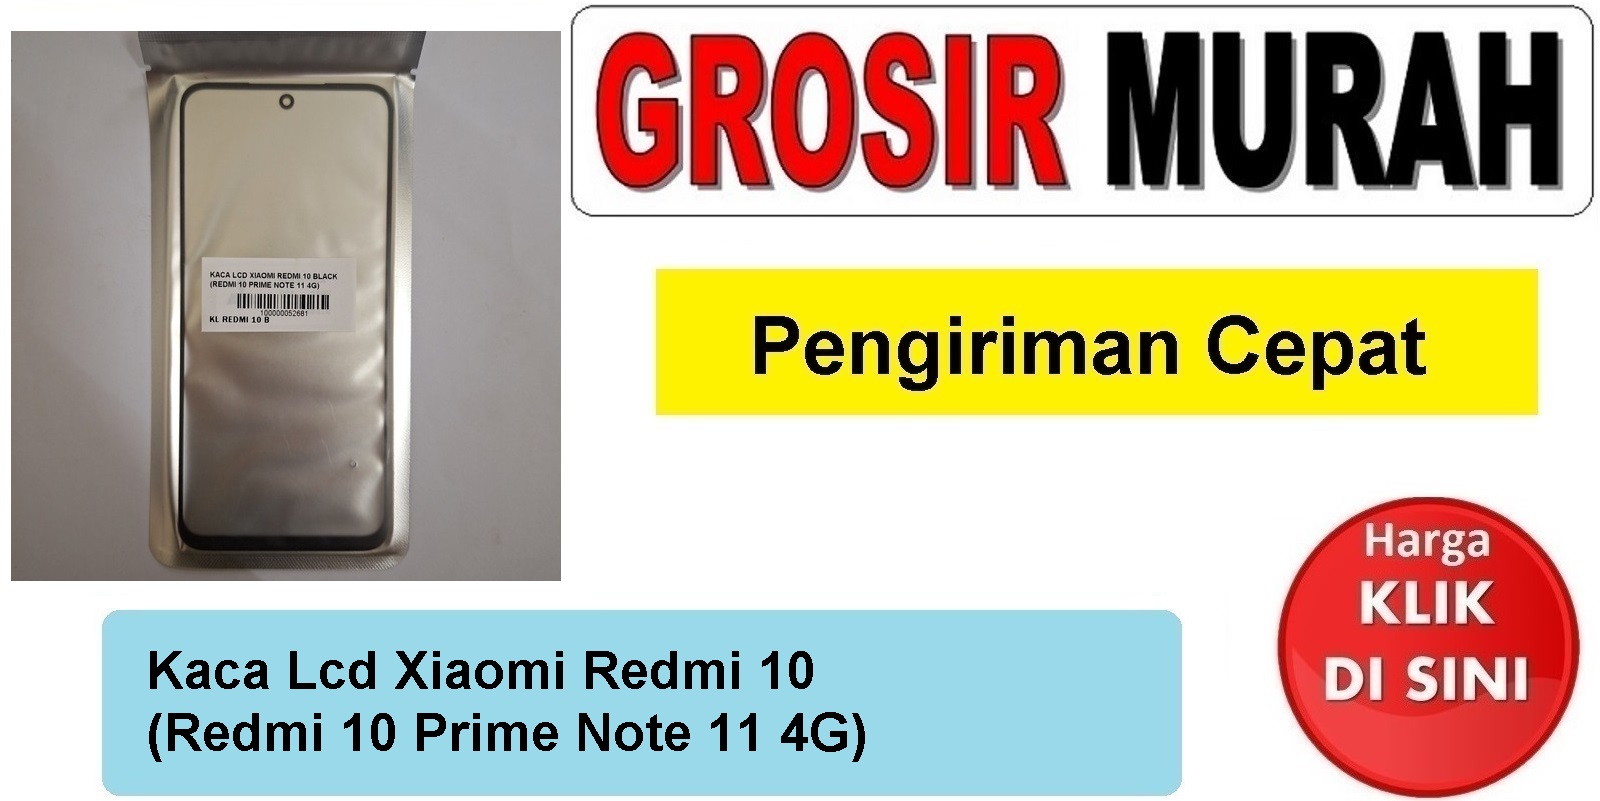 Kaca Lcd Xiaomi Redmi 10 (Redmi 10 Prime Note 11 4G) Glass Oca Kaca Depan Layar Digitizer Panel Spare Part hp Grosir